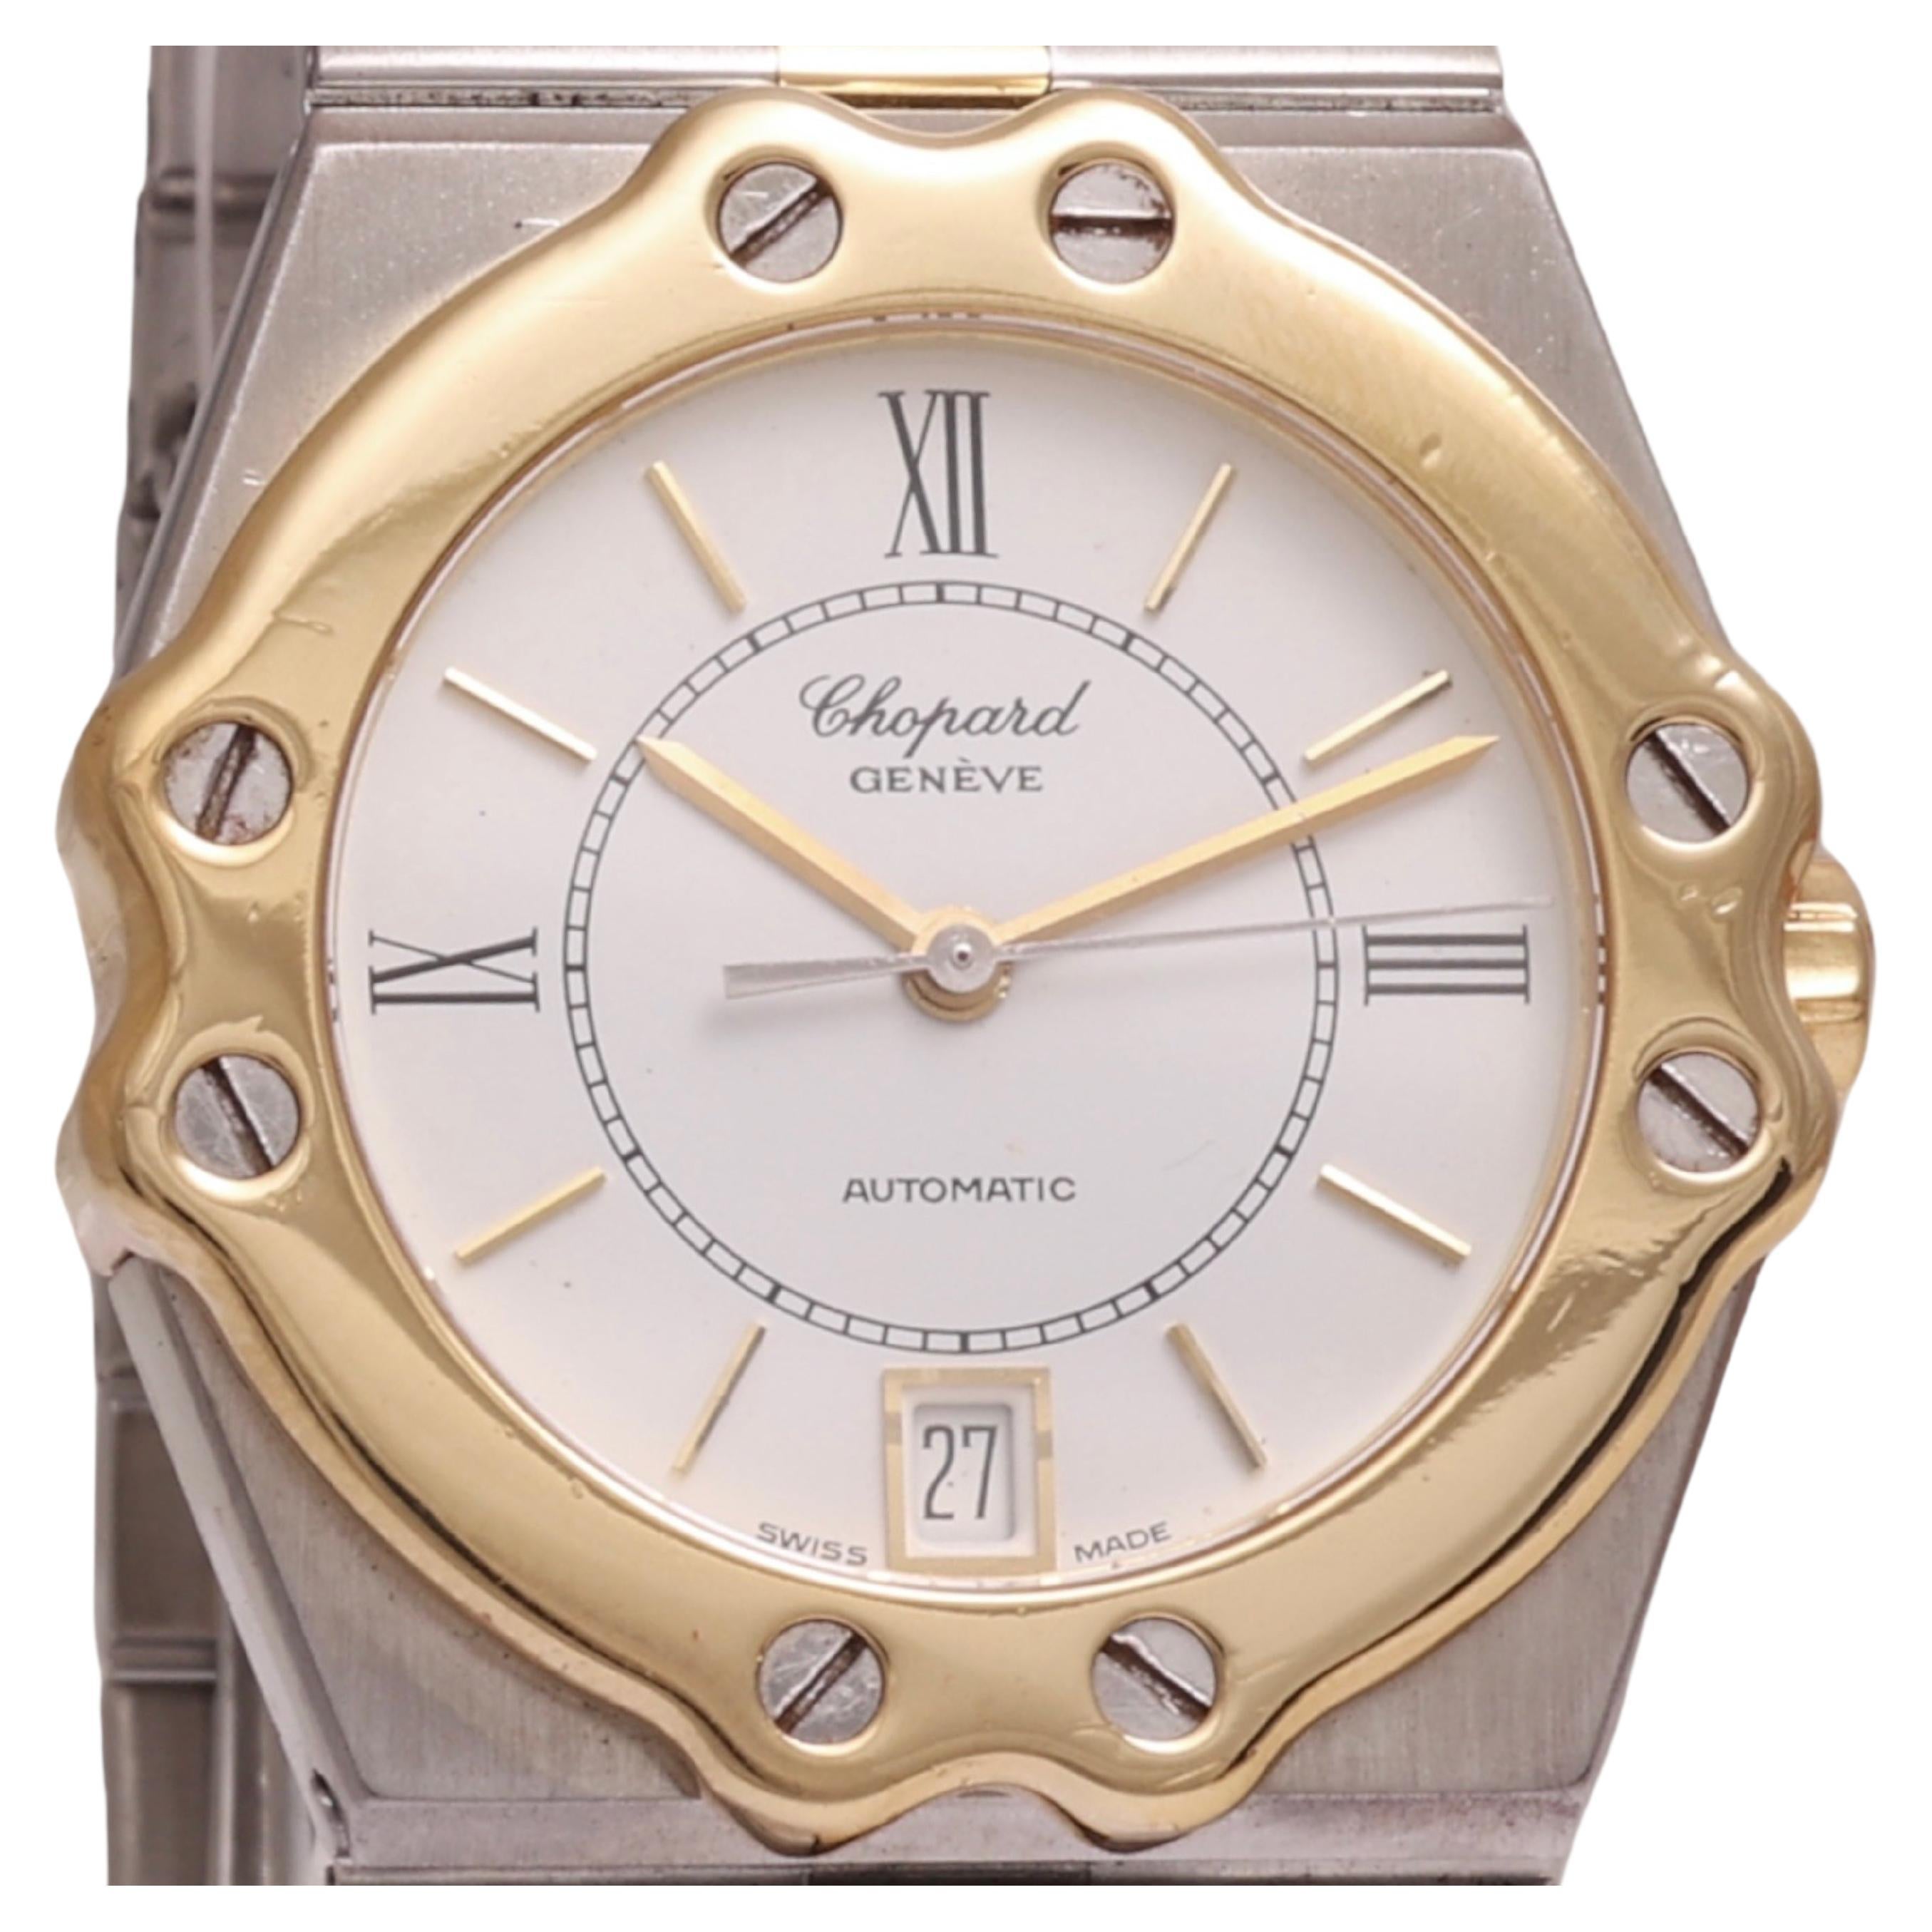 Gold & Steel Chopard St Moritz Automatic Wrist Watch